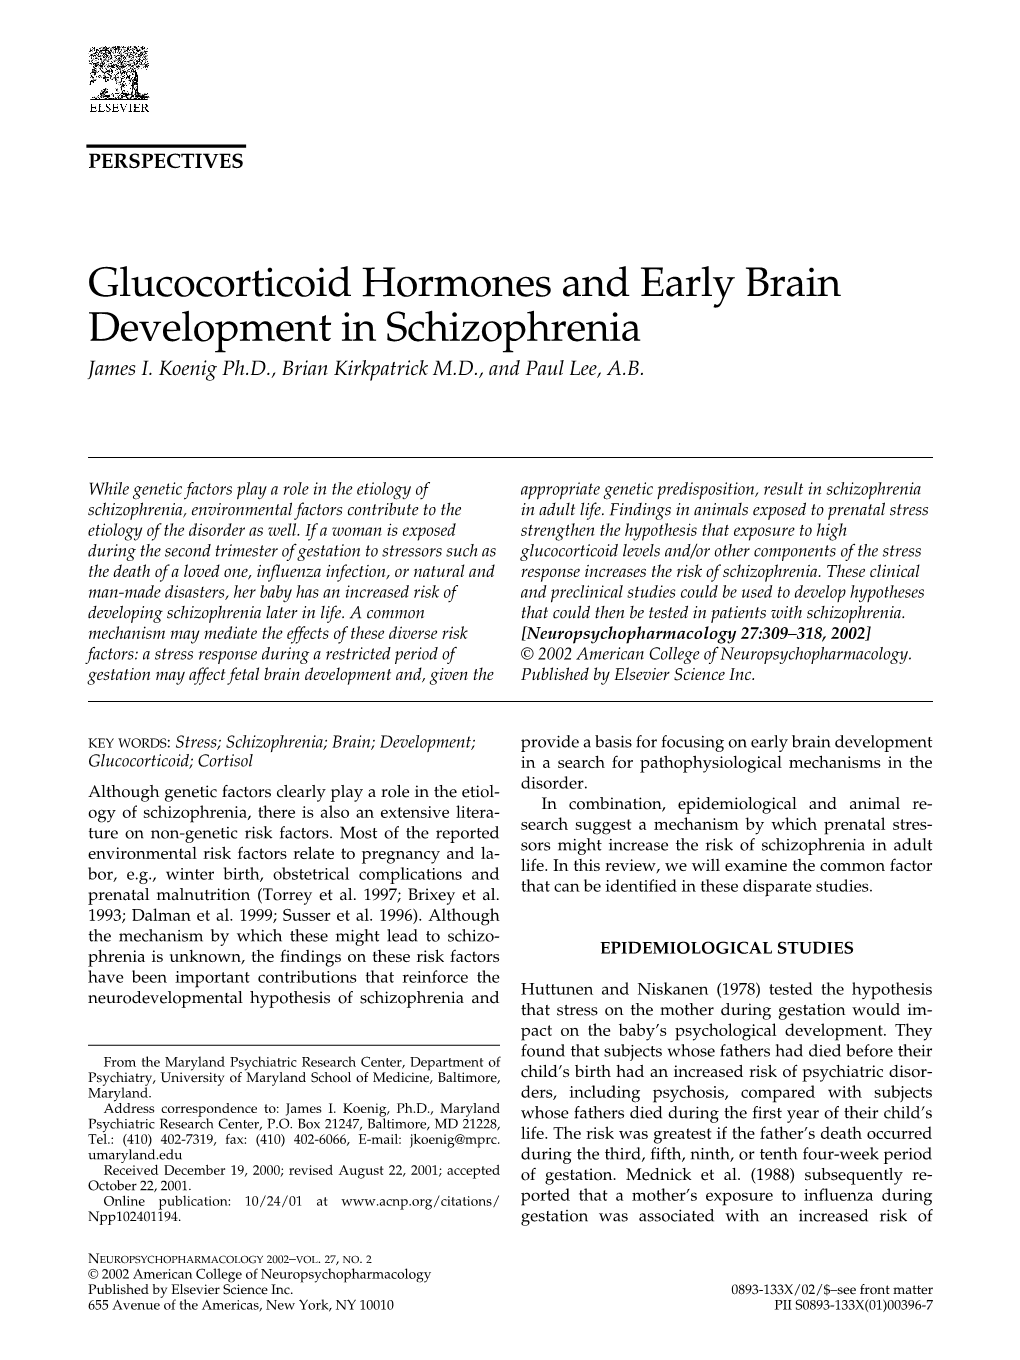 Glucocorticoid Hormones and Early Brain Development in Schizophrenia James I